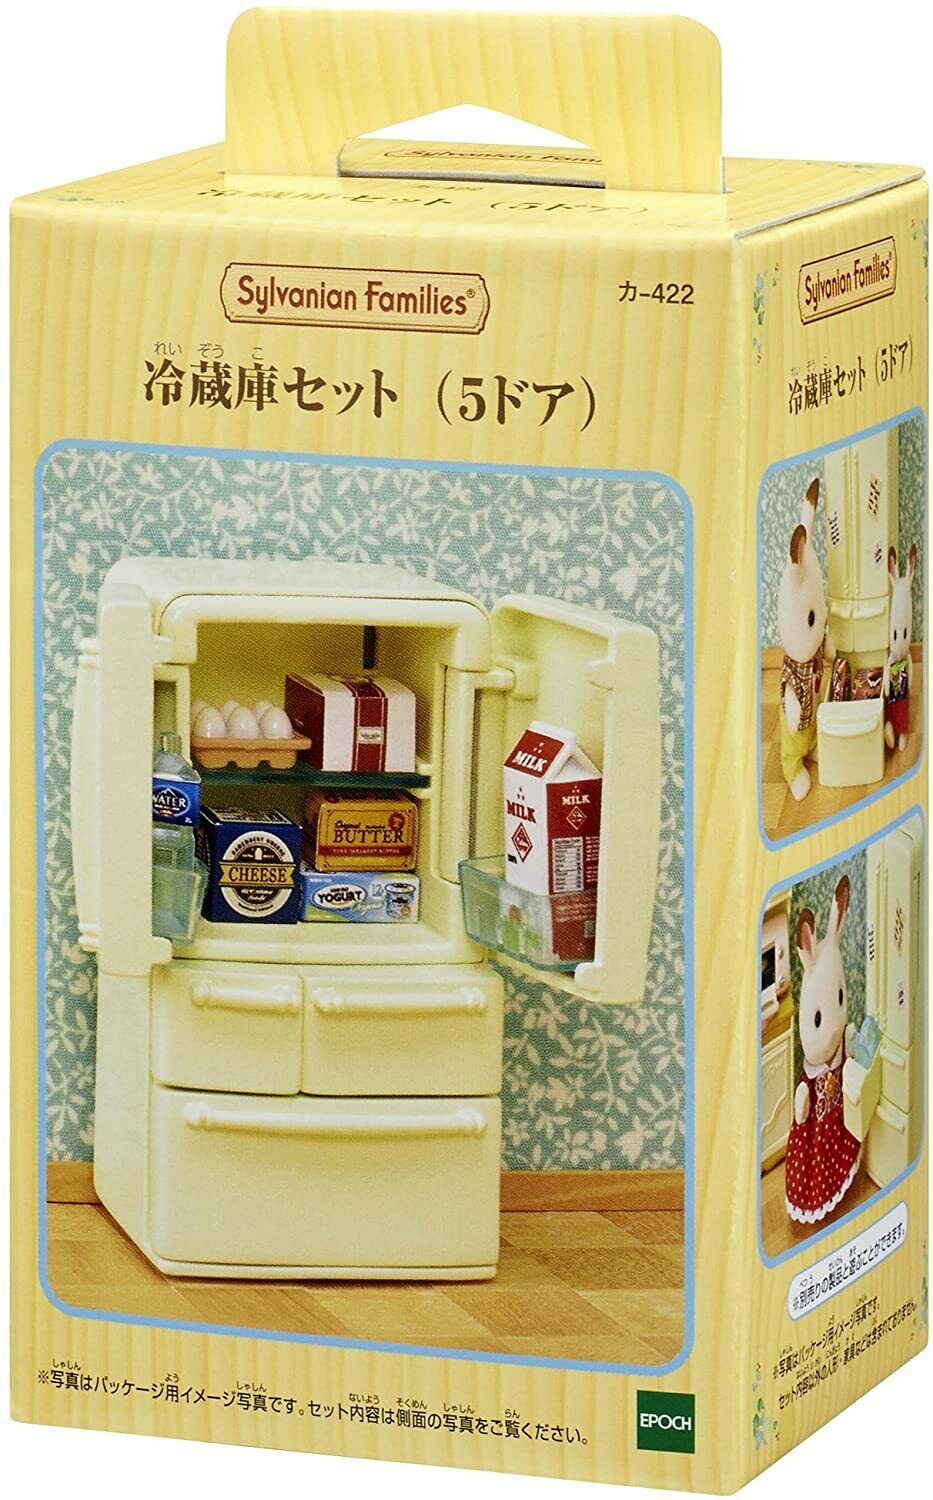 EPOCH Sylvanian Families Refrigerator Set (5 doors) JAPAN import NEW